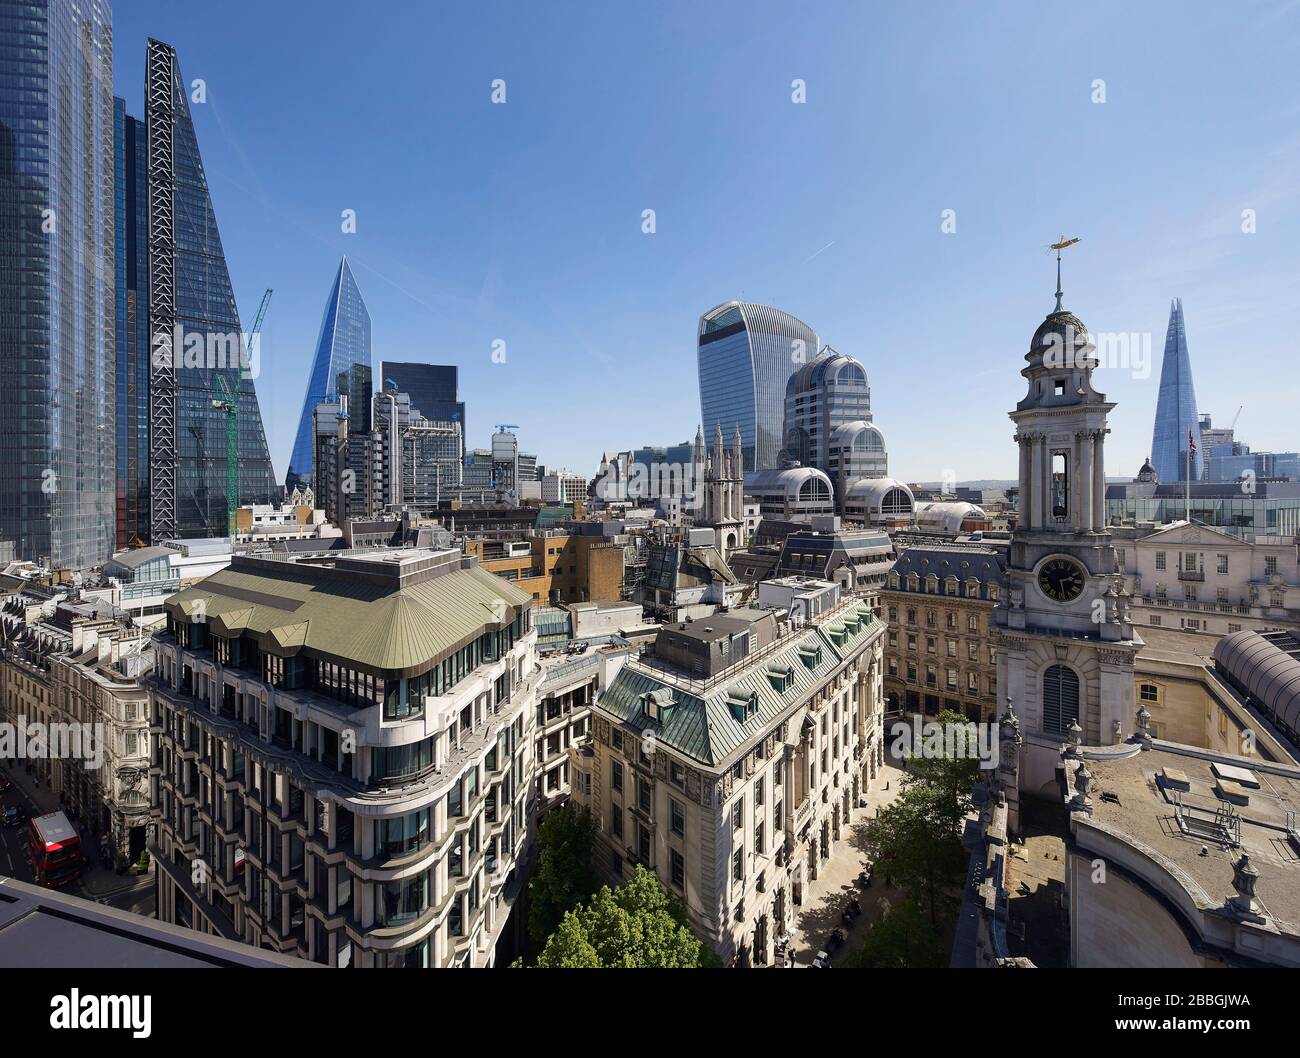 Aerial view of City cluster. 52 Lime Street - The Scalpel, London, United Kingdom. Architect: Kohn Pedersen Fox Associates (KPF), 2018. Stock Photo